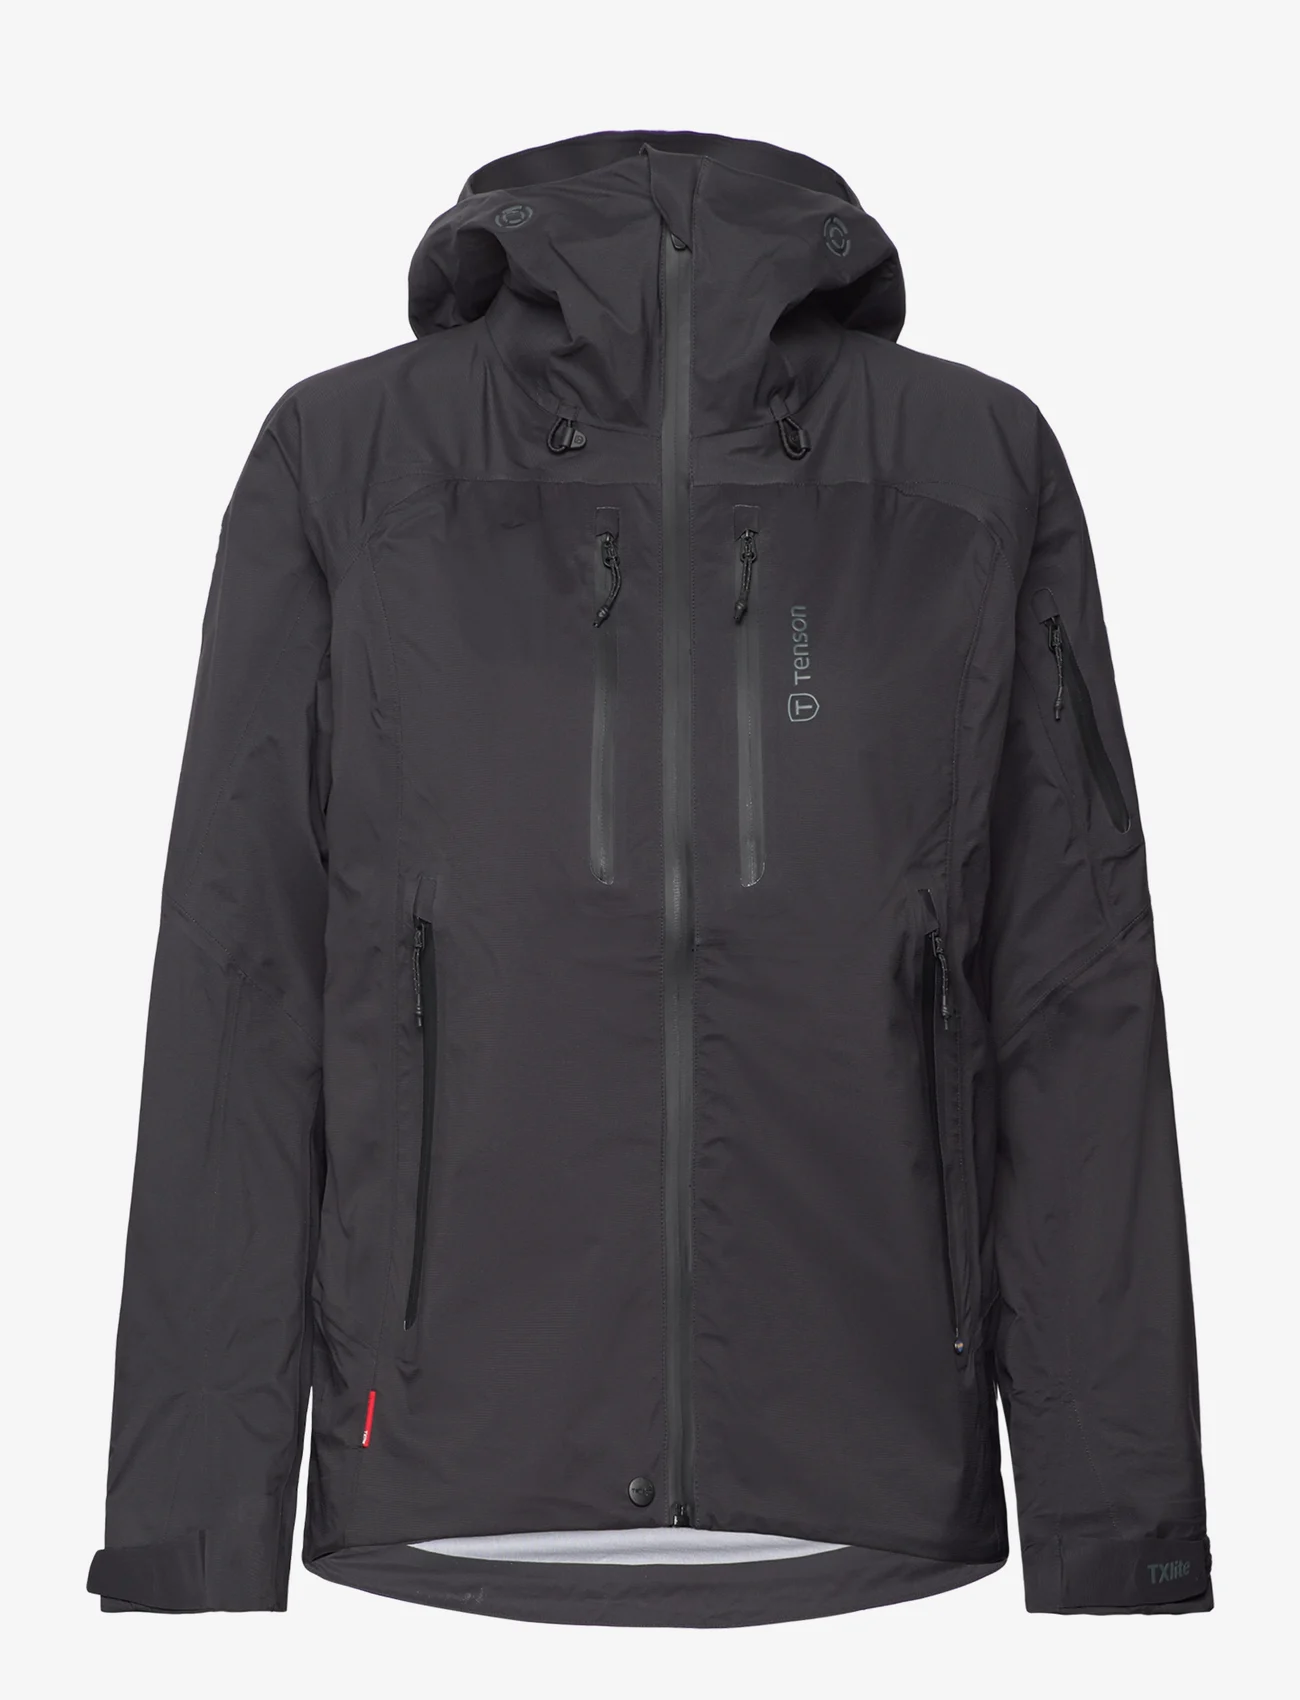 Tenson - TXlite Skagway Shell Jacket Women - outdoor & rain jackets - black - 0